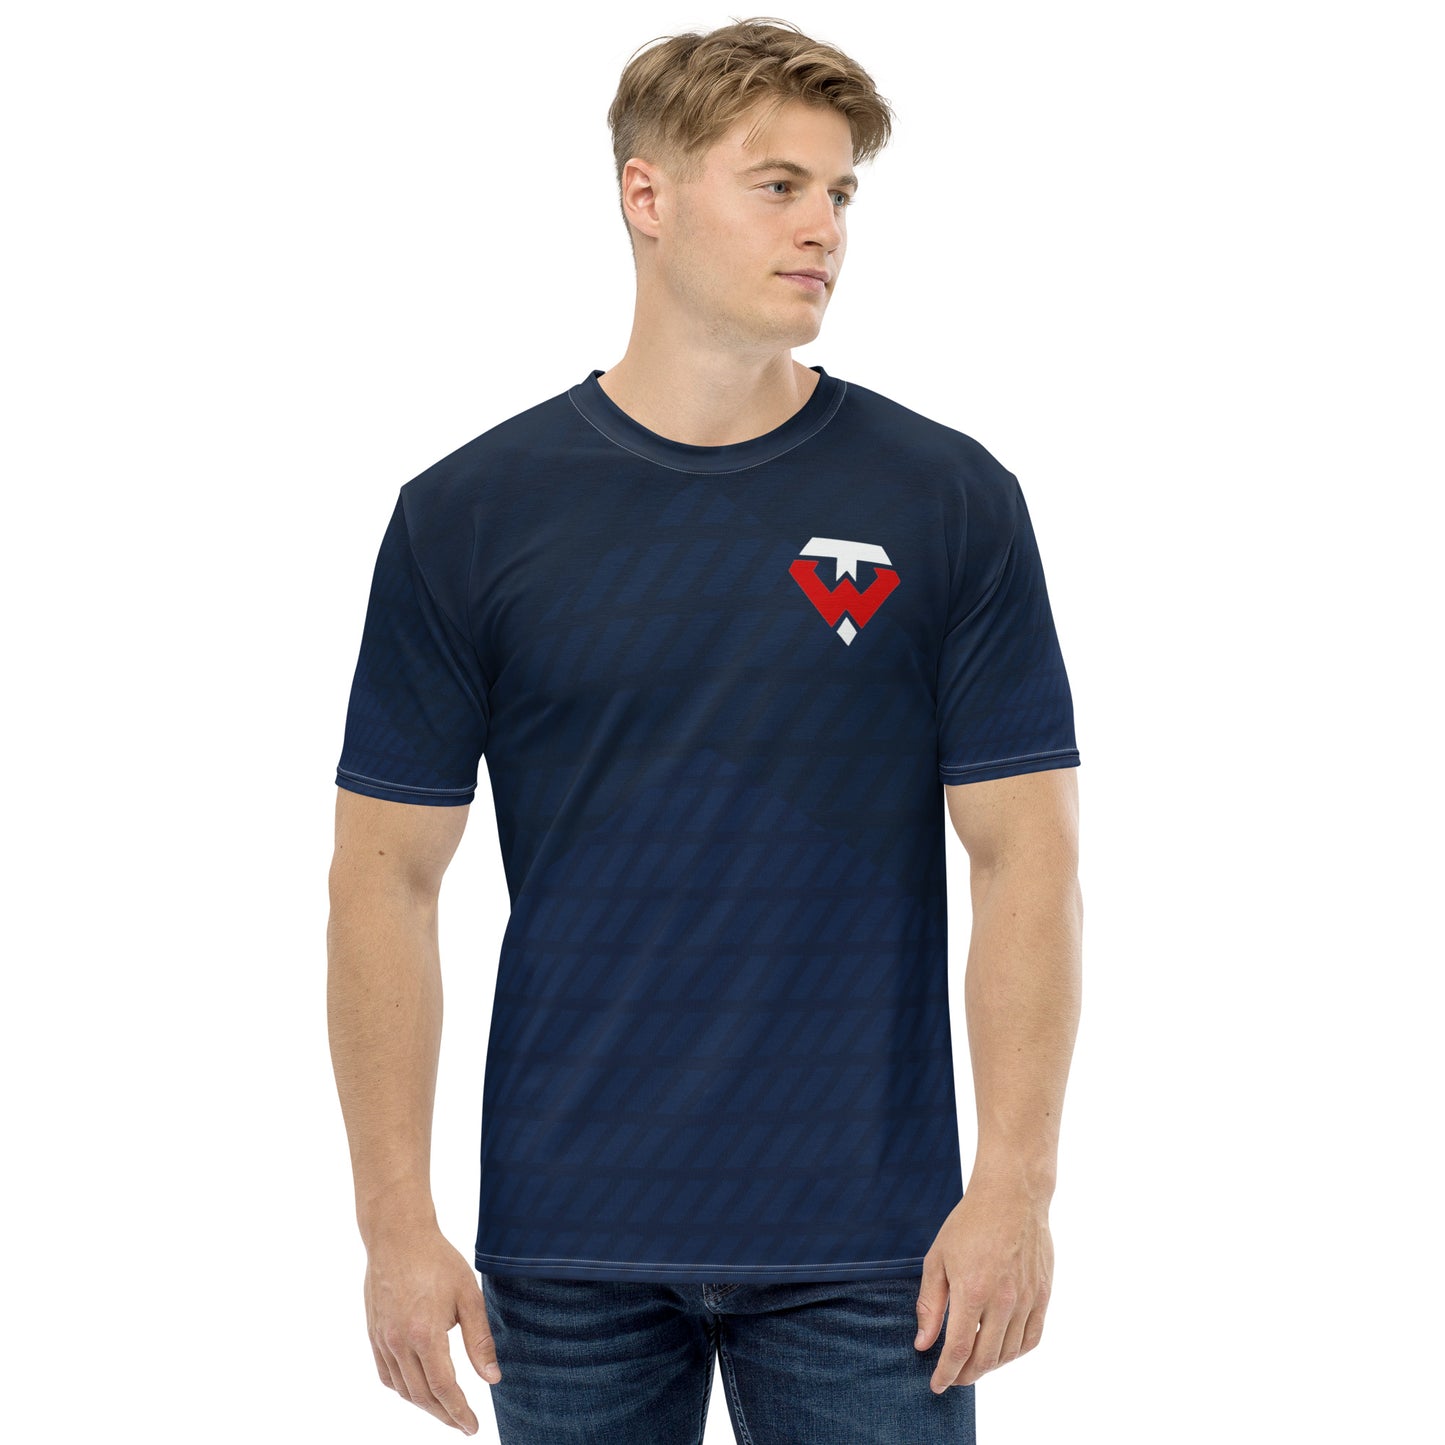 Tampa Warriors TW Seal Shadow Performance Men's t-shirt